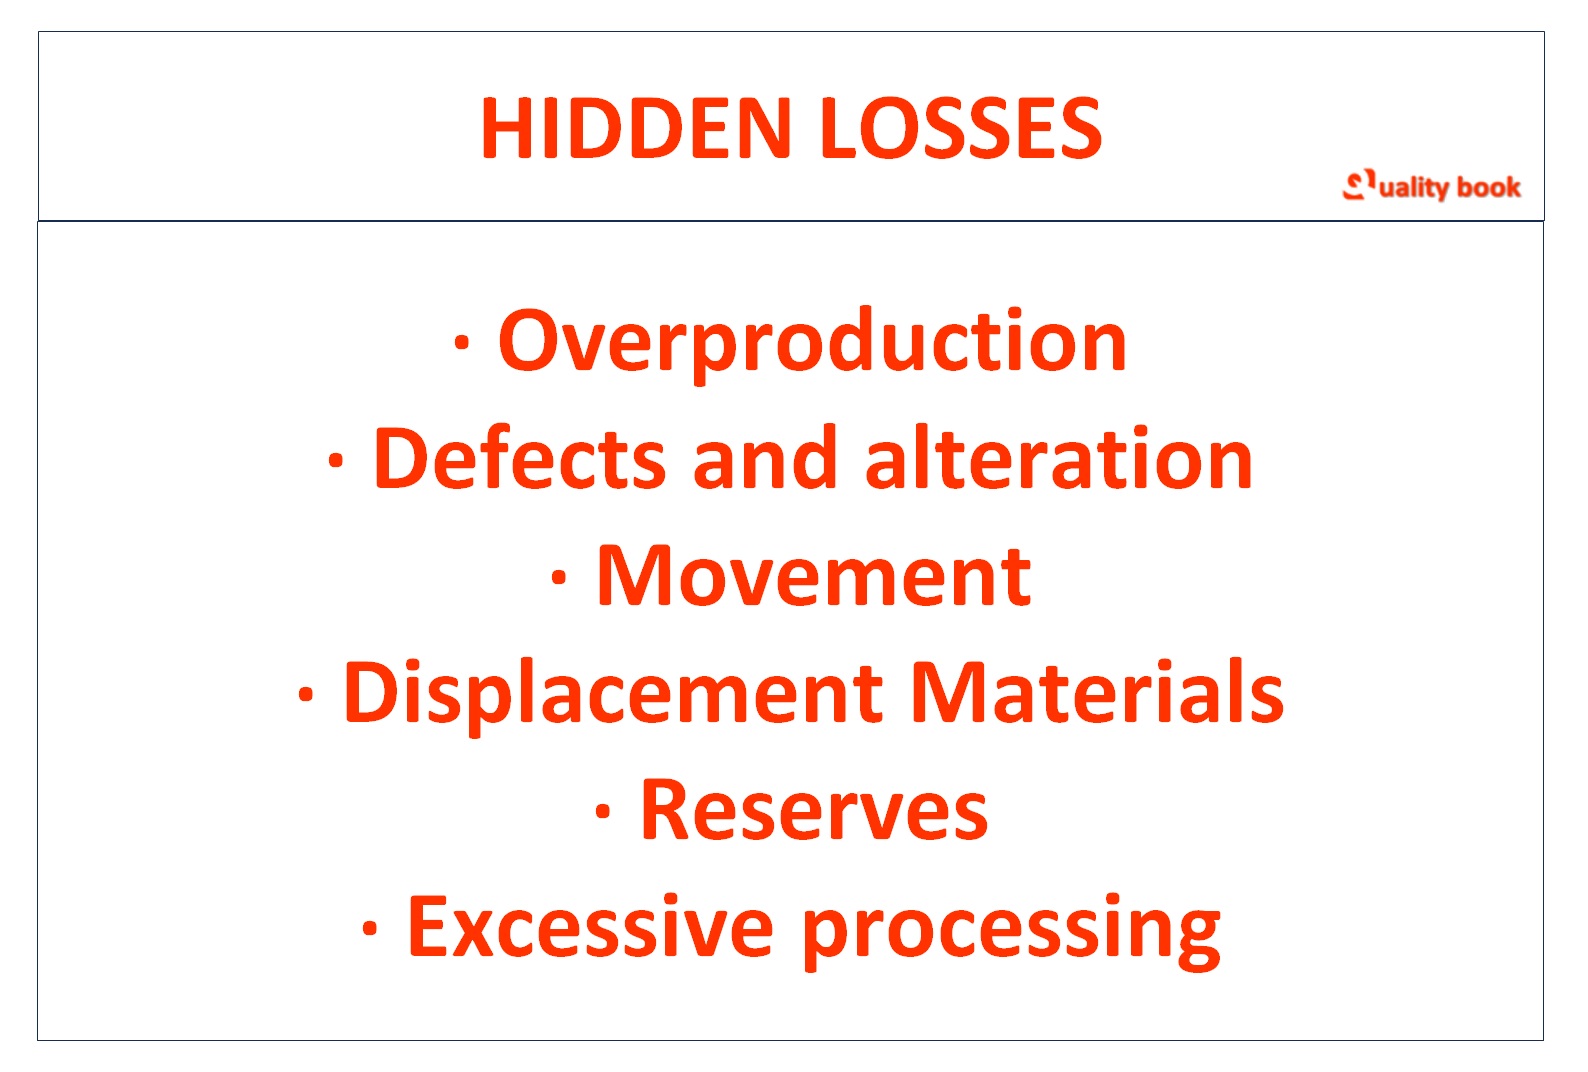 Hidden losses